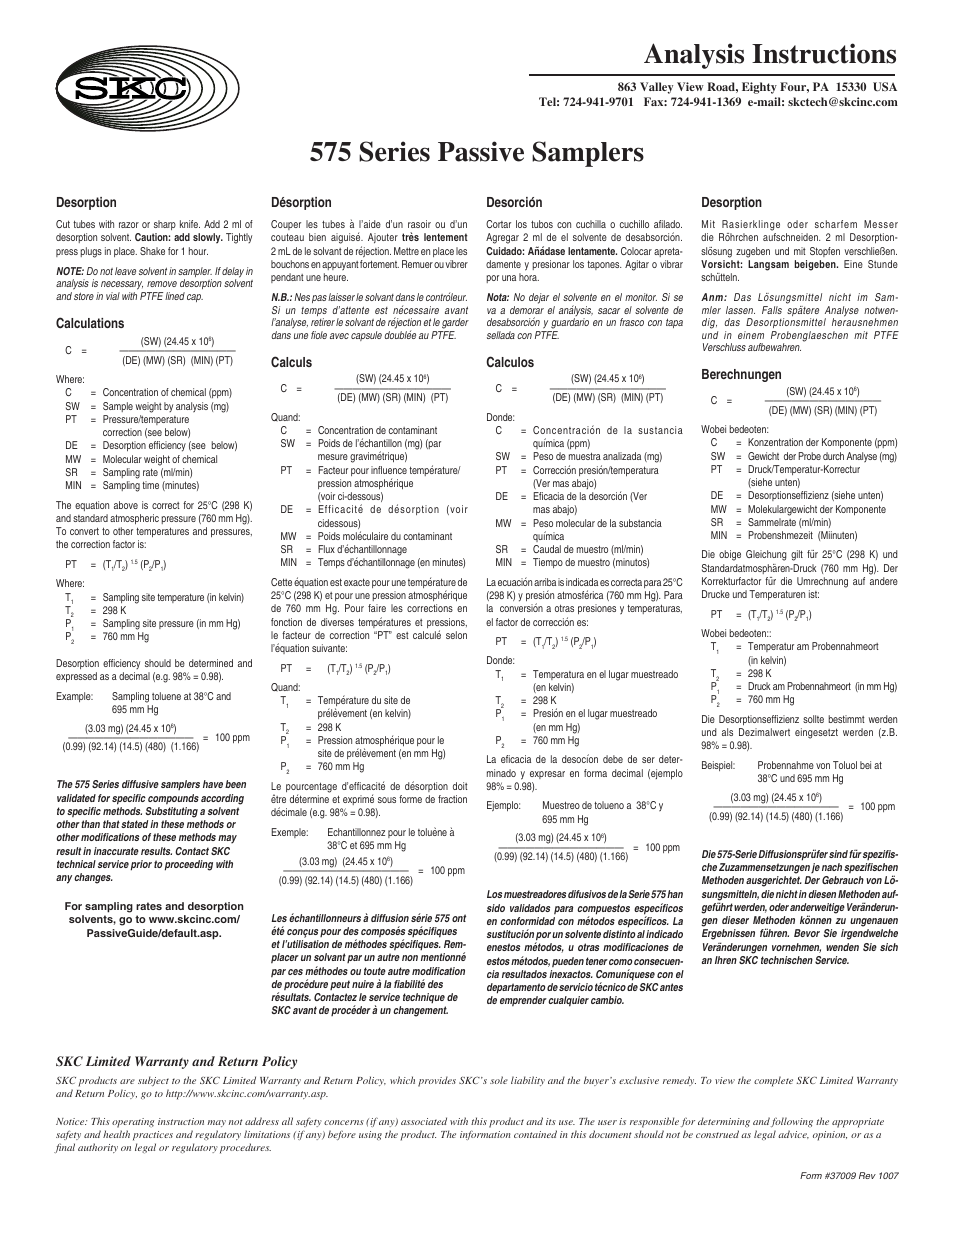 575 Series Passive Sampler Analysis Instructions